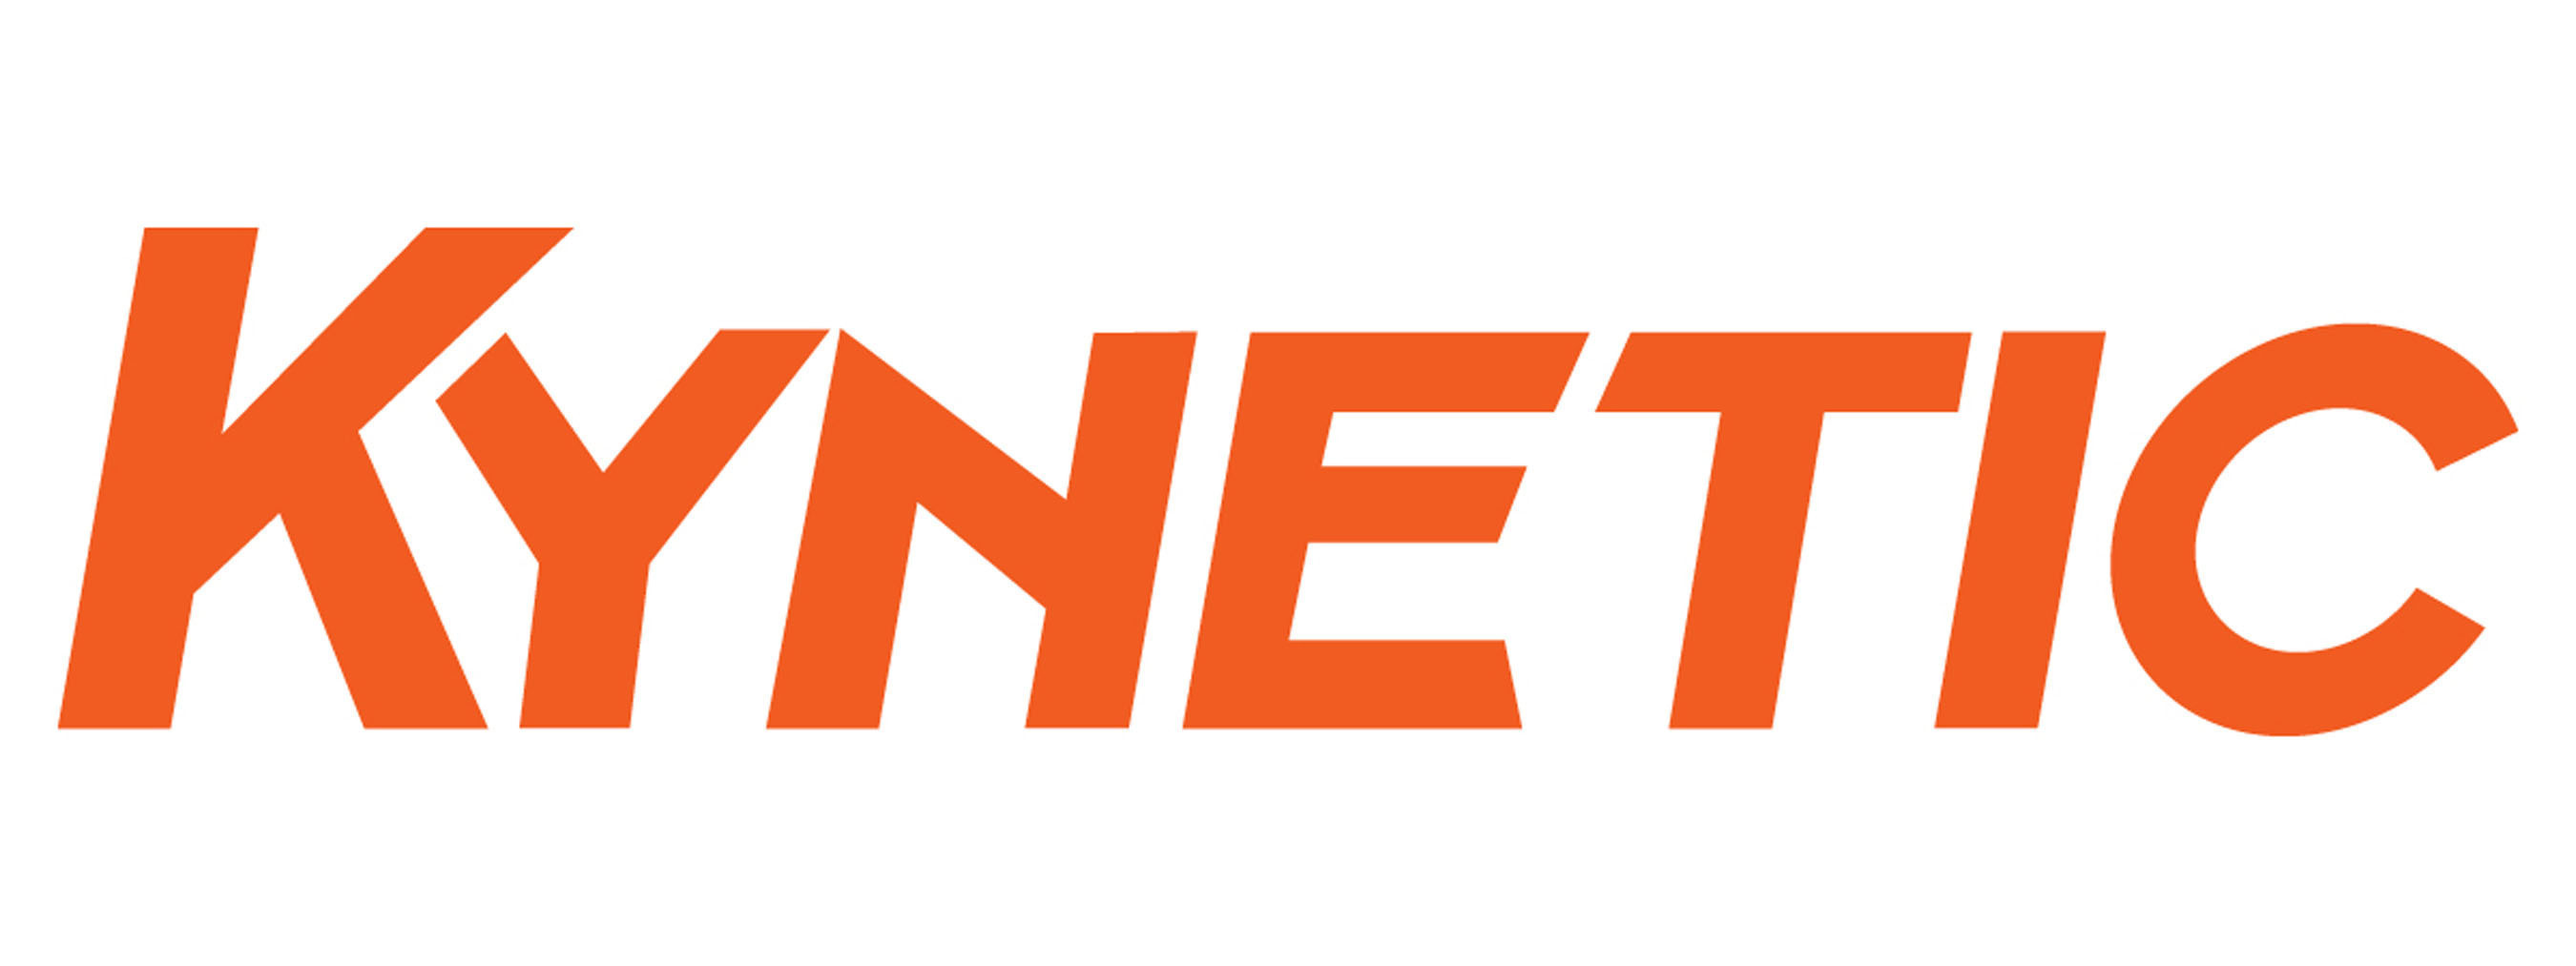 Internet Entrepreneur Michael G. Rubin Launches Kynetic